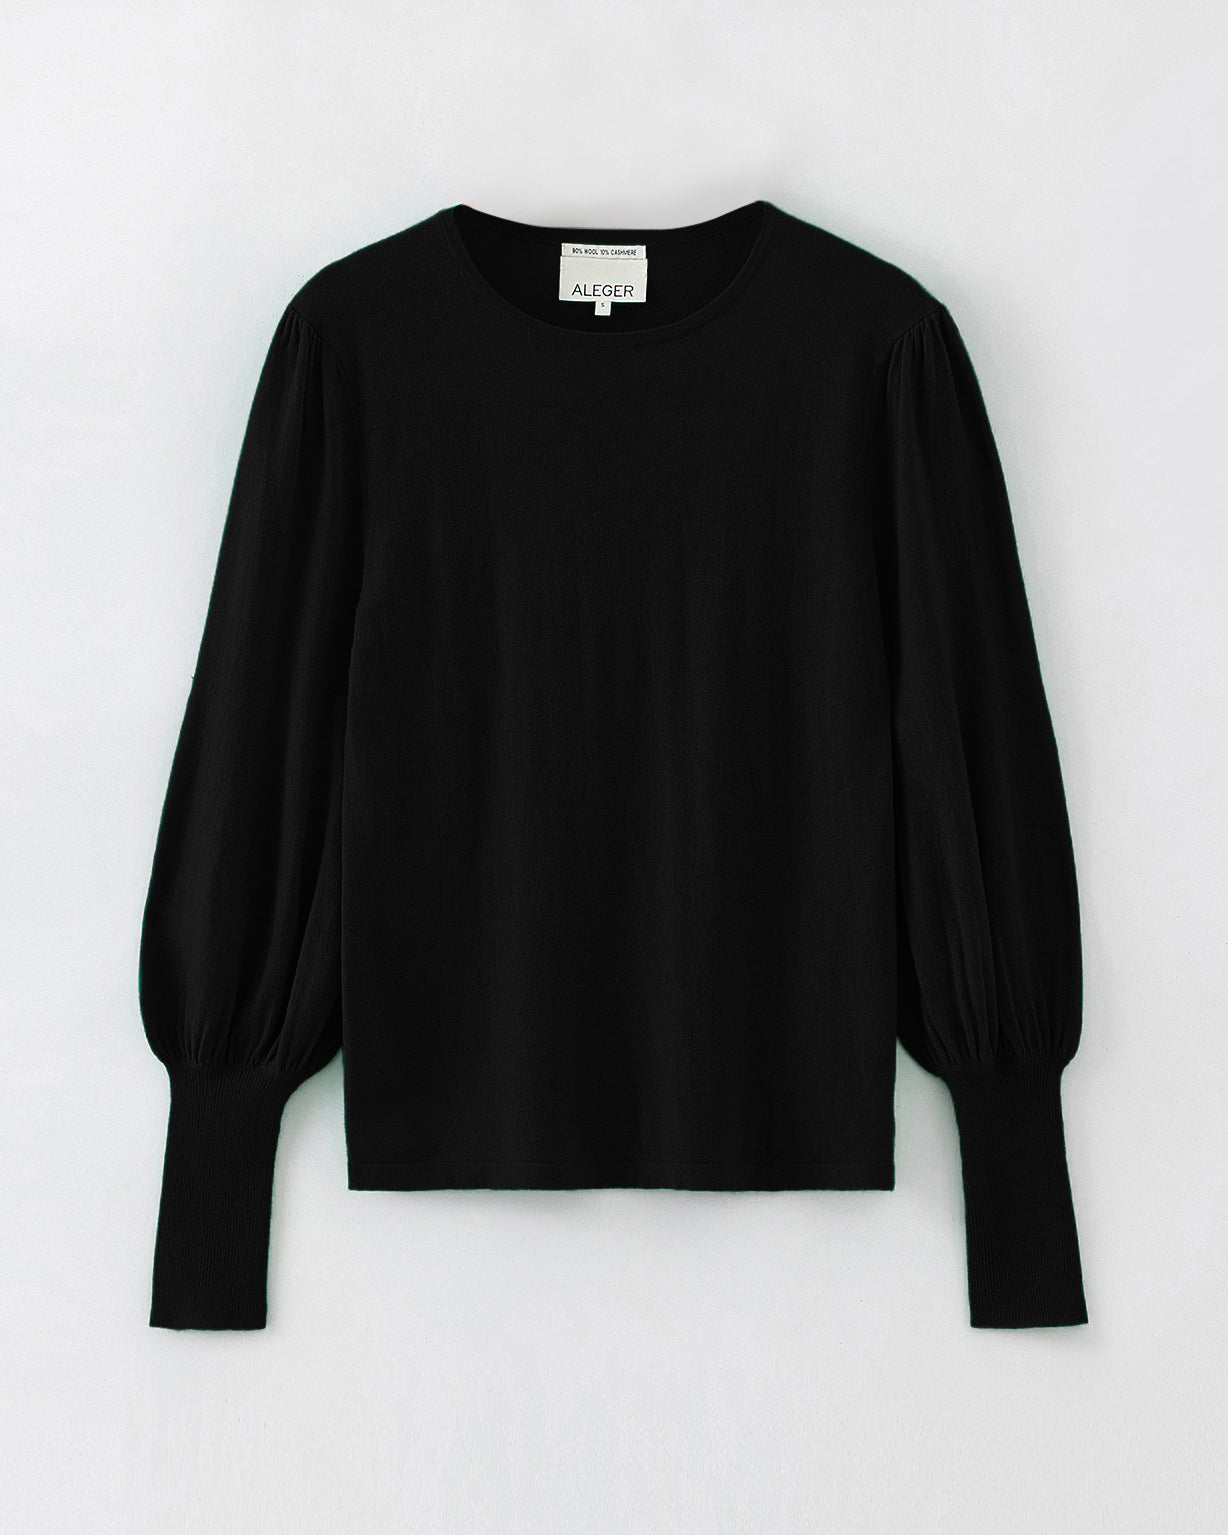 N.33 ALEGER Cashmere Blend Bell Sleeve Sweater - BLACK - RESTOCKED!